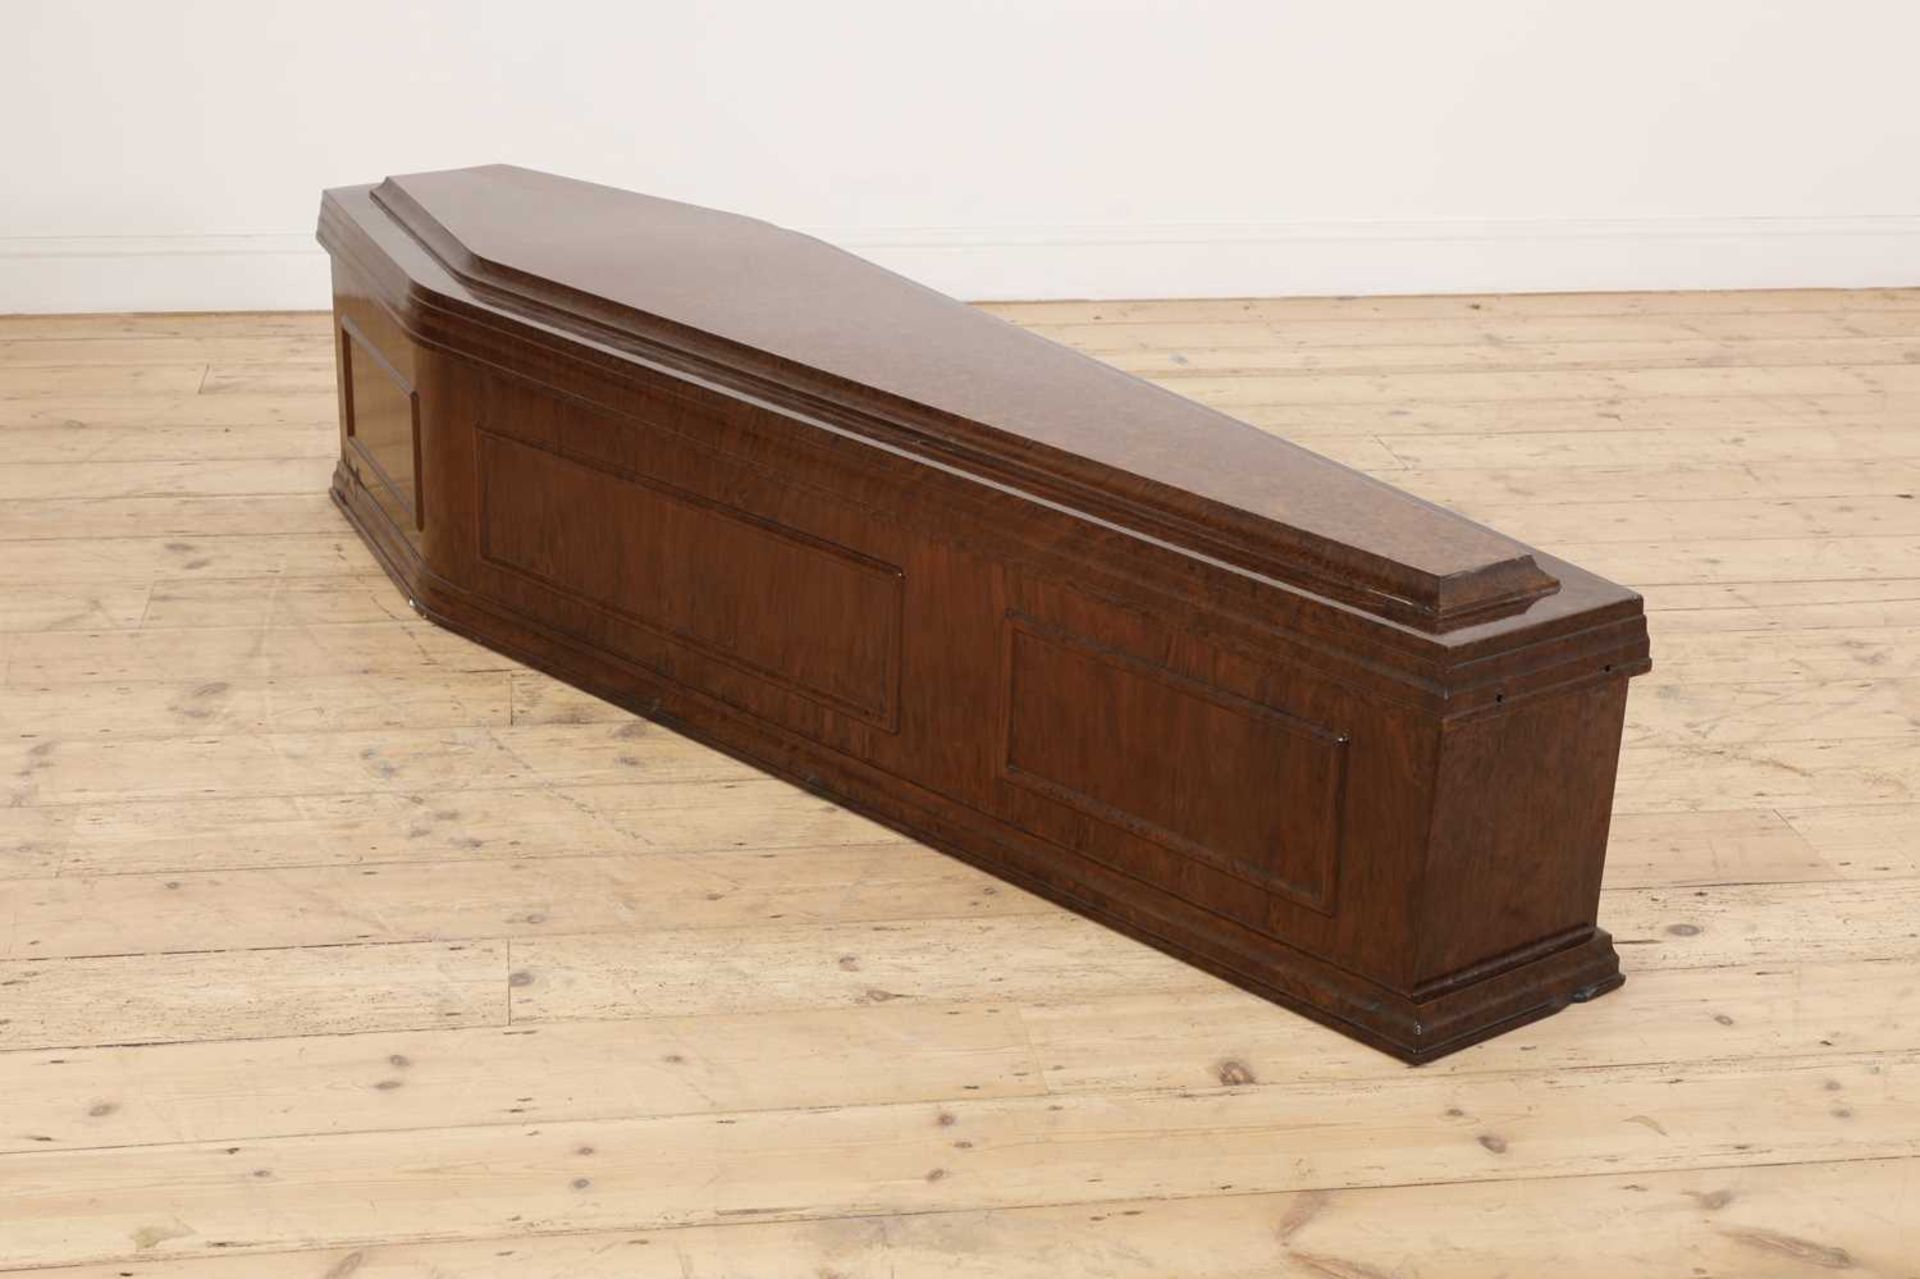 A rare full-sized Bakelite coffin, - Image 2 of 12